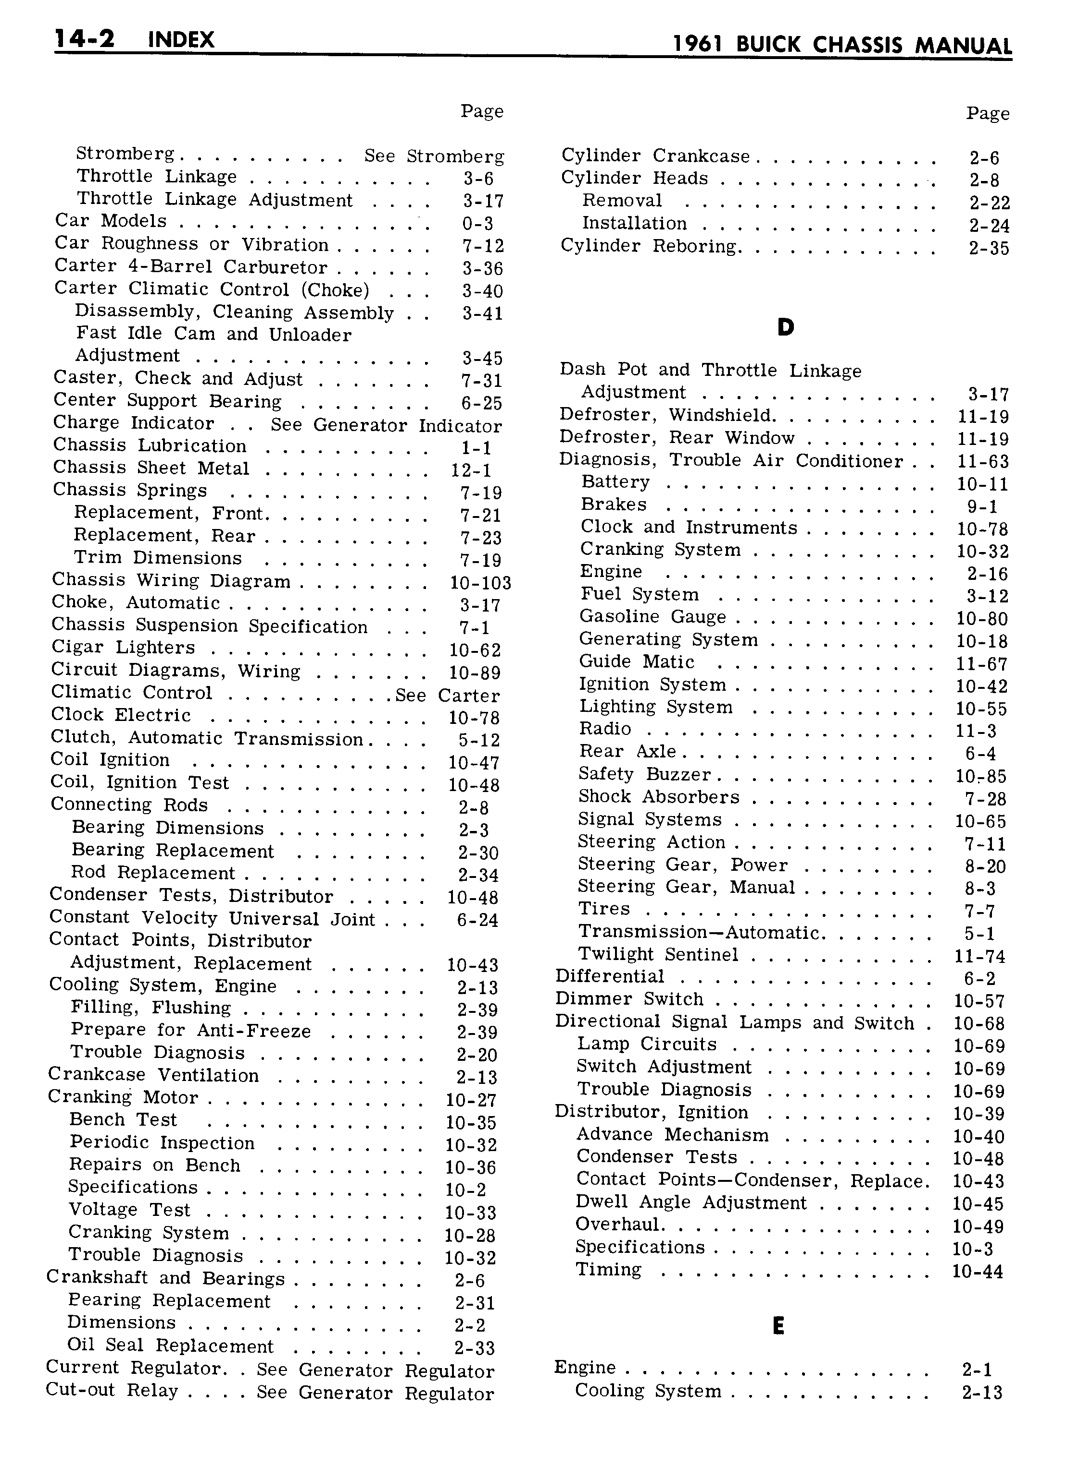 n_13 1961 Buick Shop Manual - Index-002-002.jpg